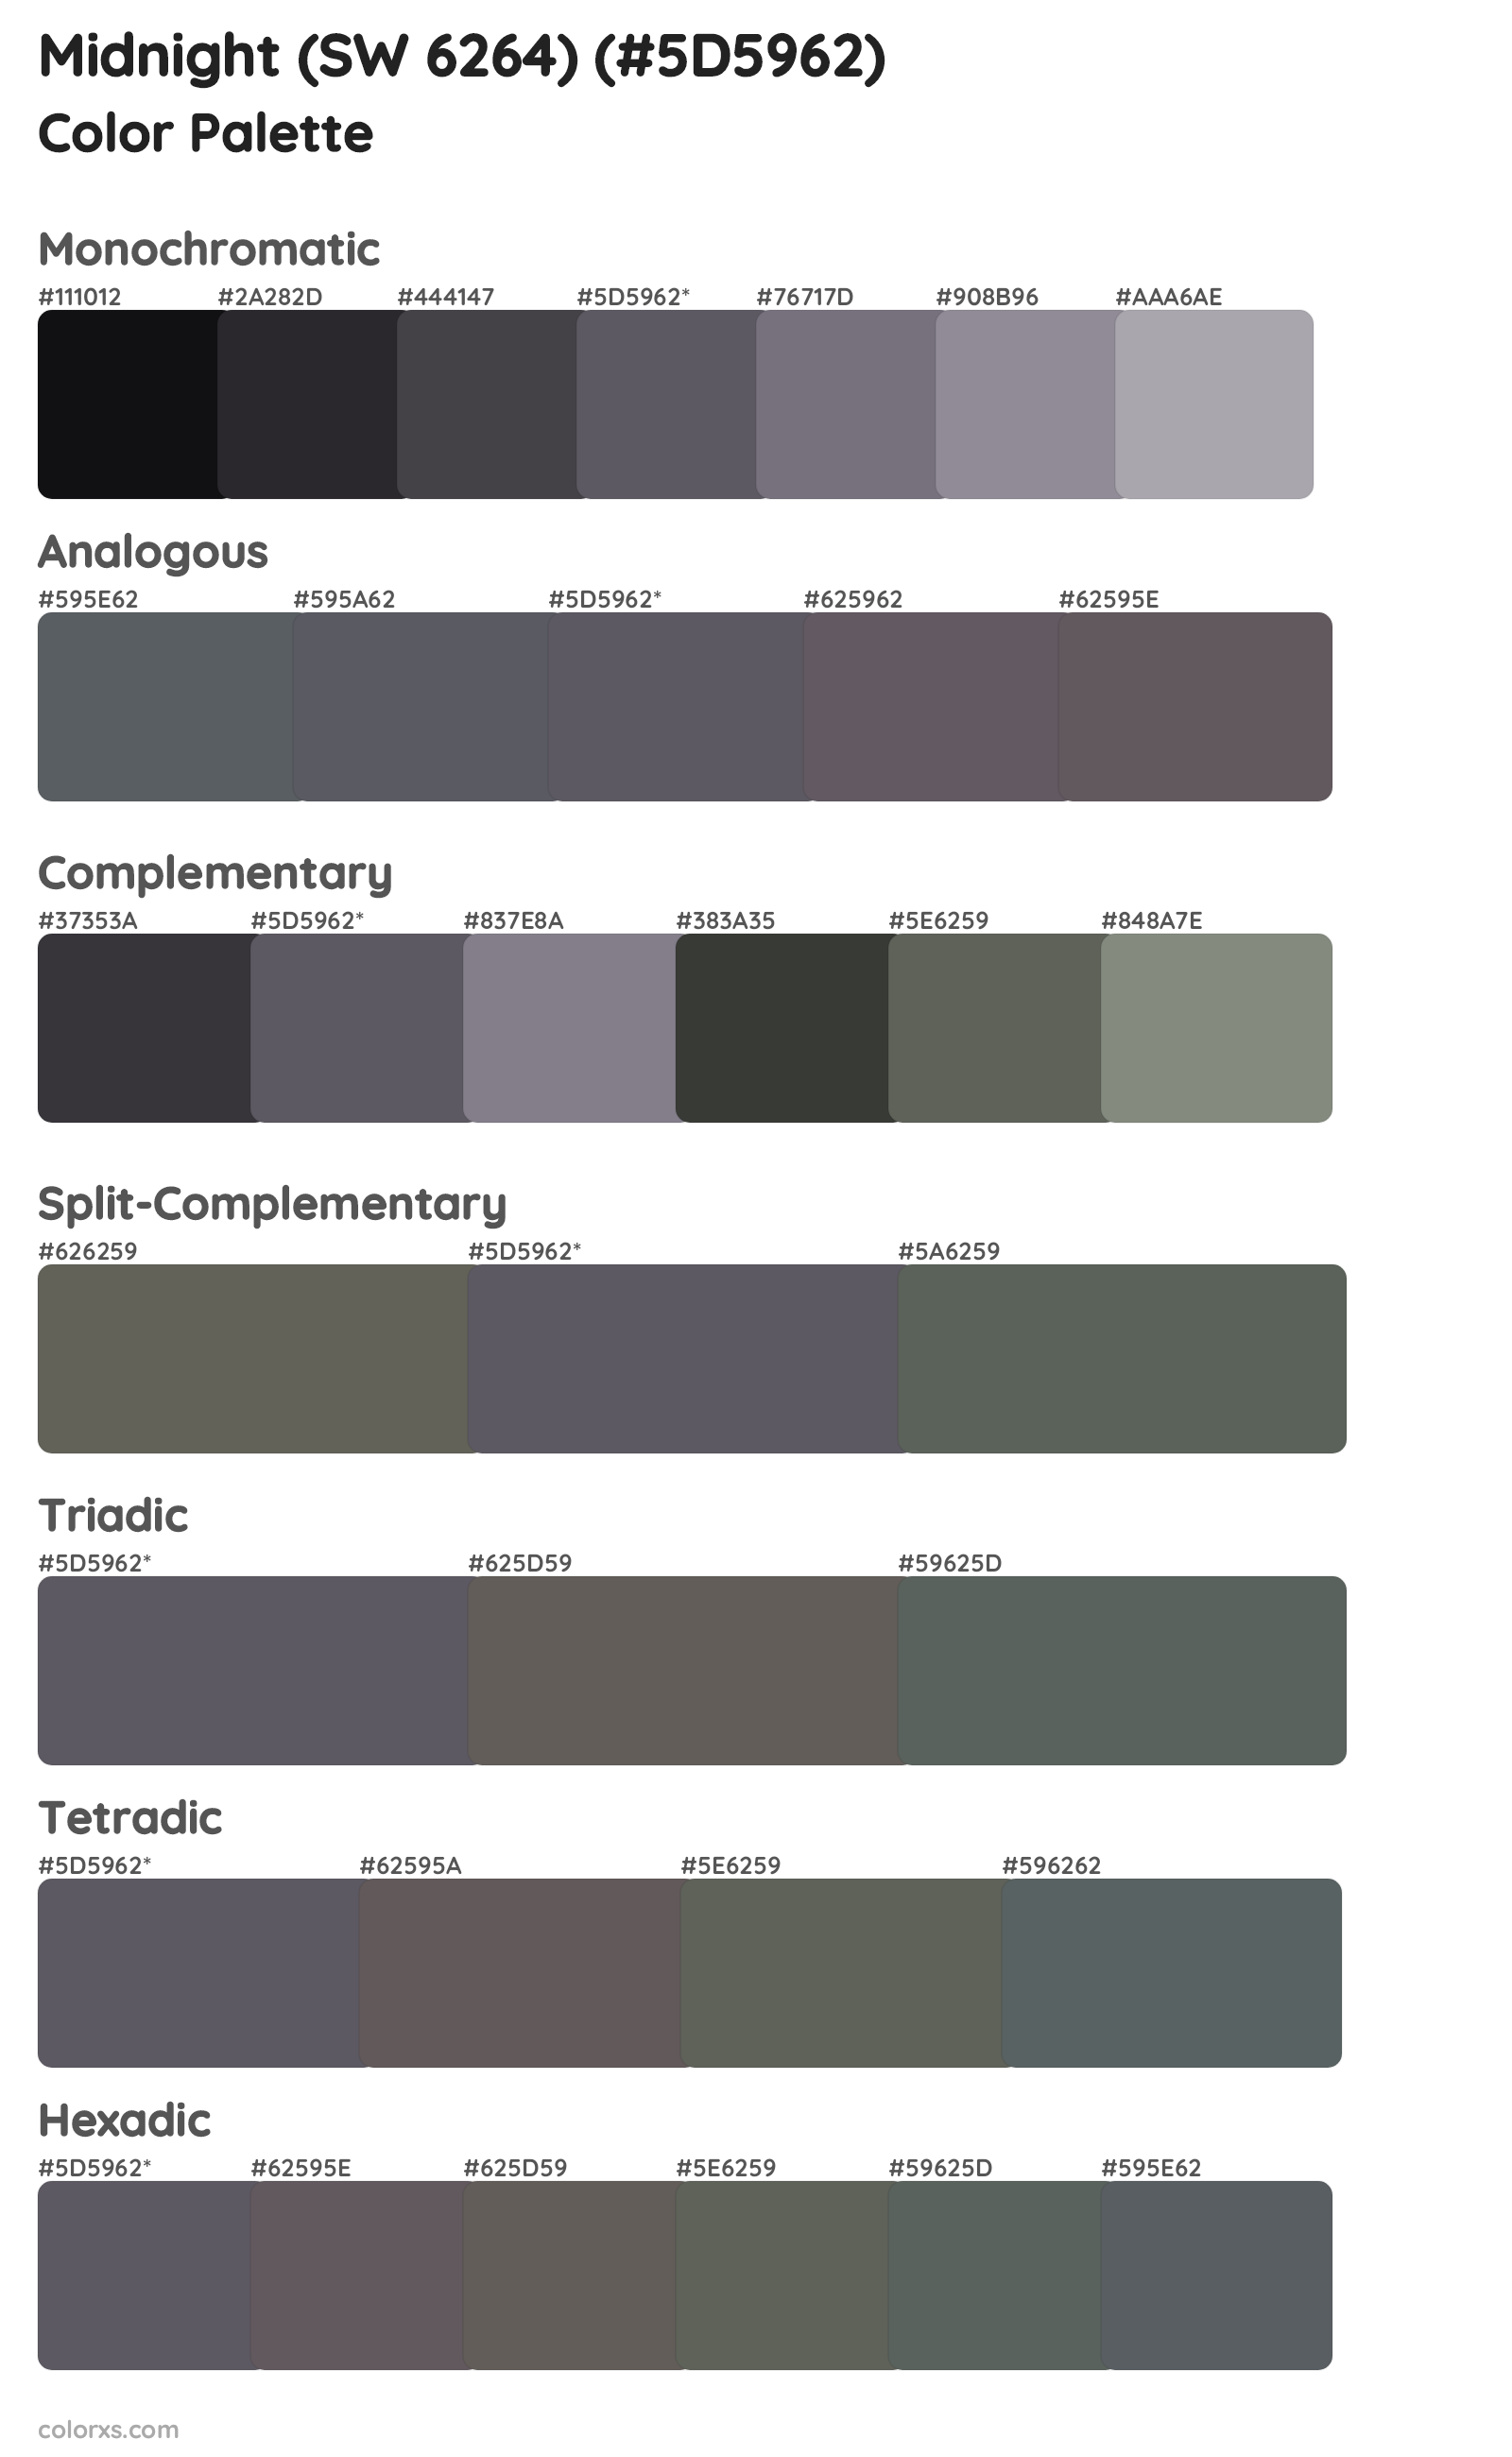 Midnight (SW 6264) Color Scheme Palettes